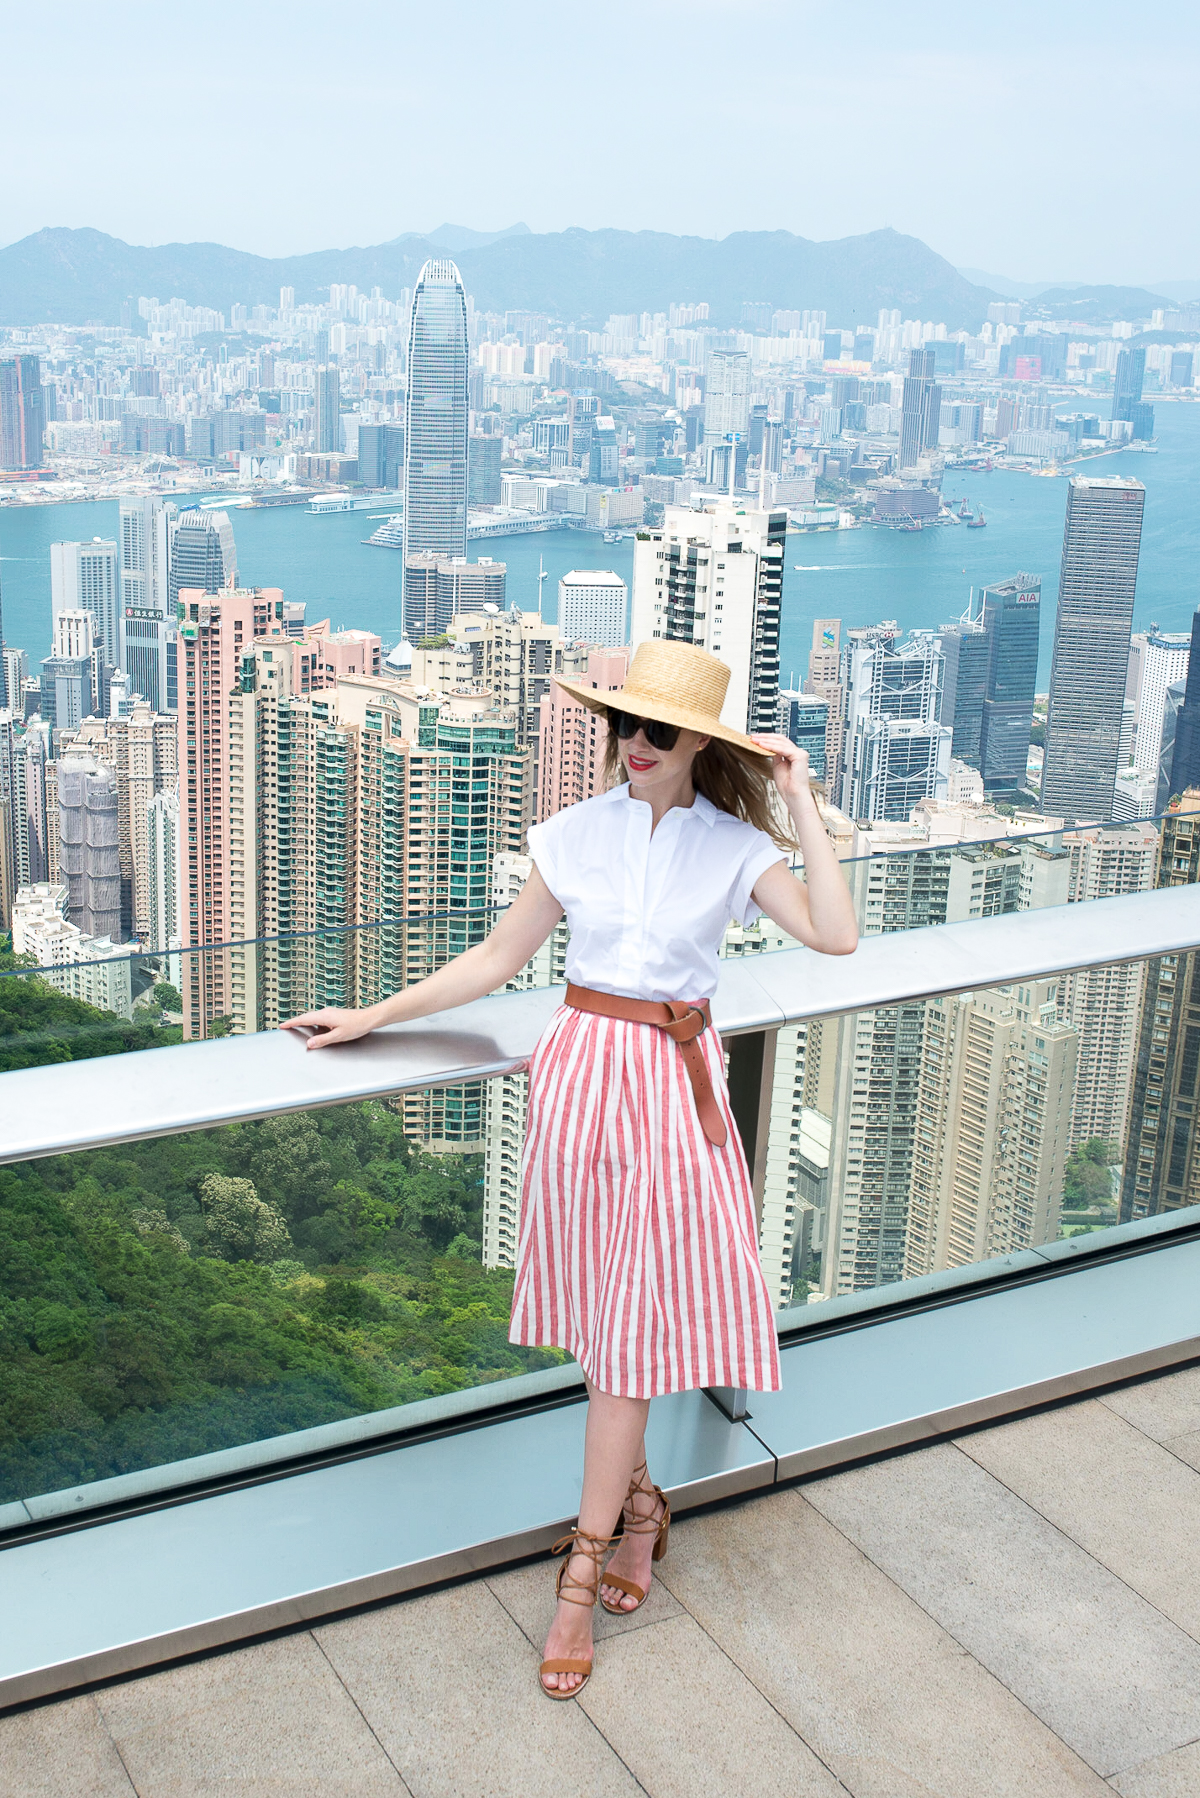 Stacie Flinner Top 10 Things to do Hong Kong-70.jpg